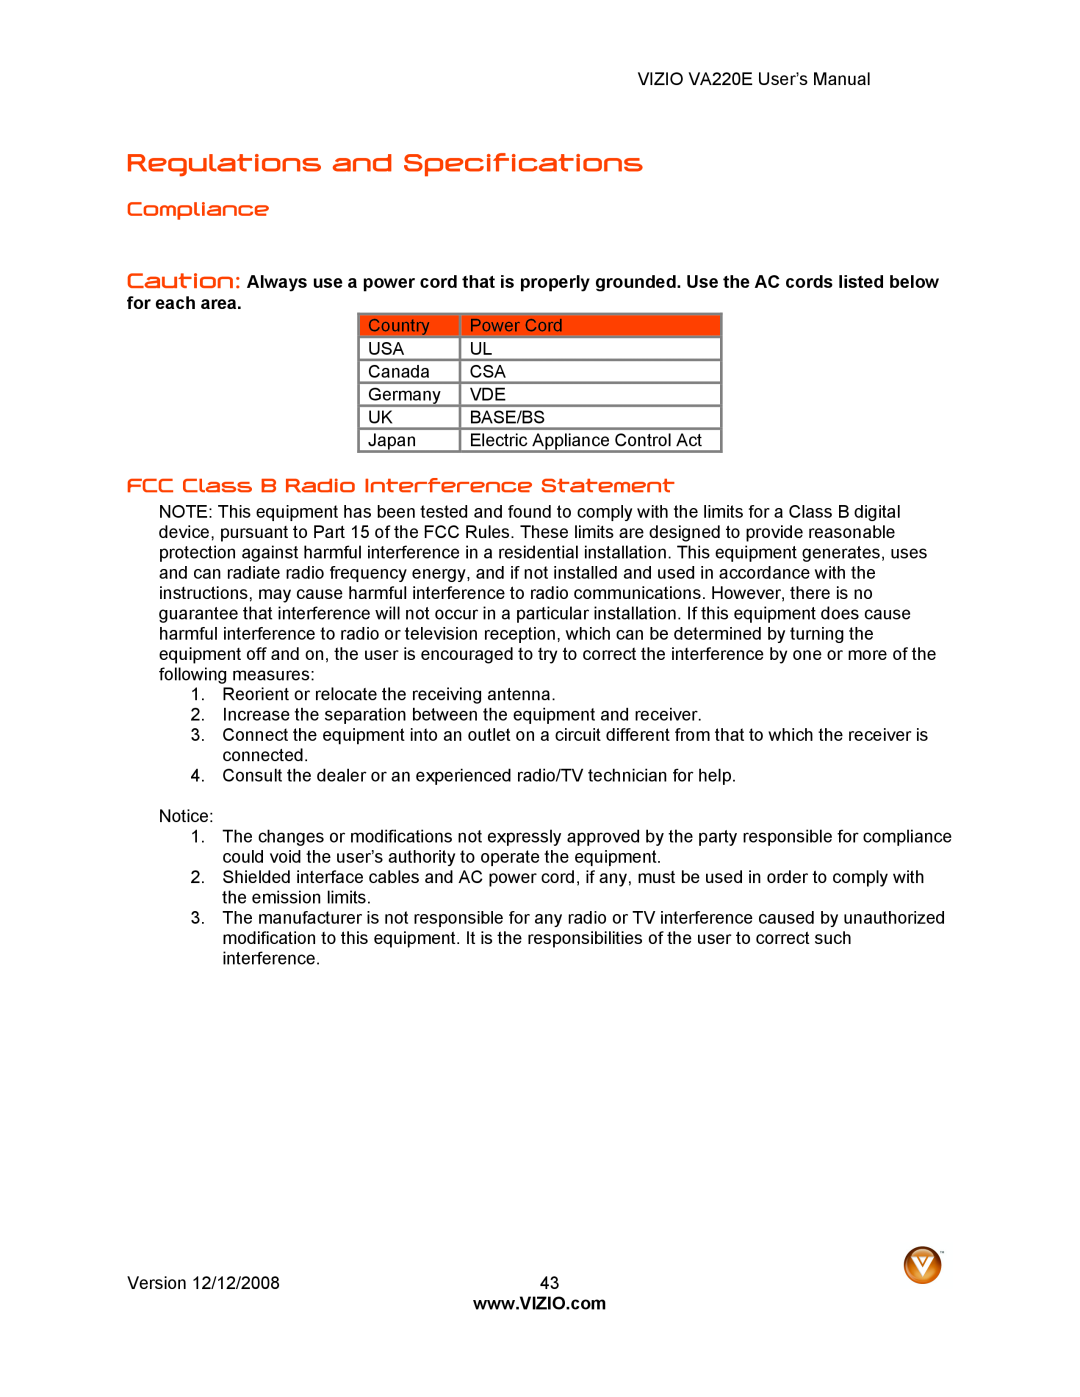 Vizio VA220E user manual Regulations and Specifications, Compliance, FCC Class B Radio Interference Statement 